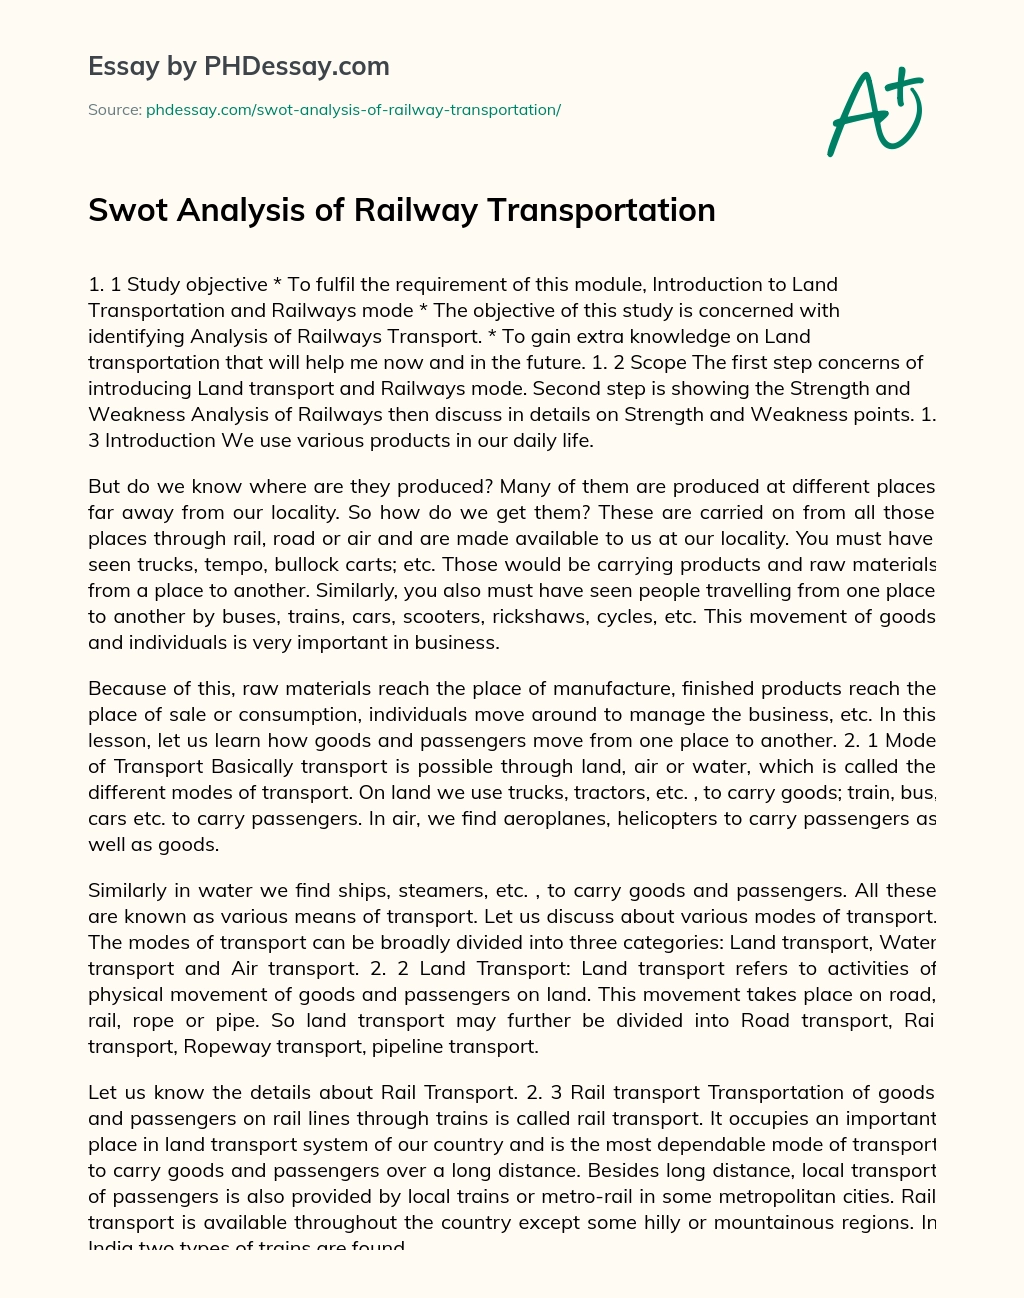 Swot Analysis of Railway Transportation essay